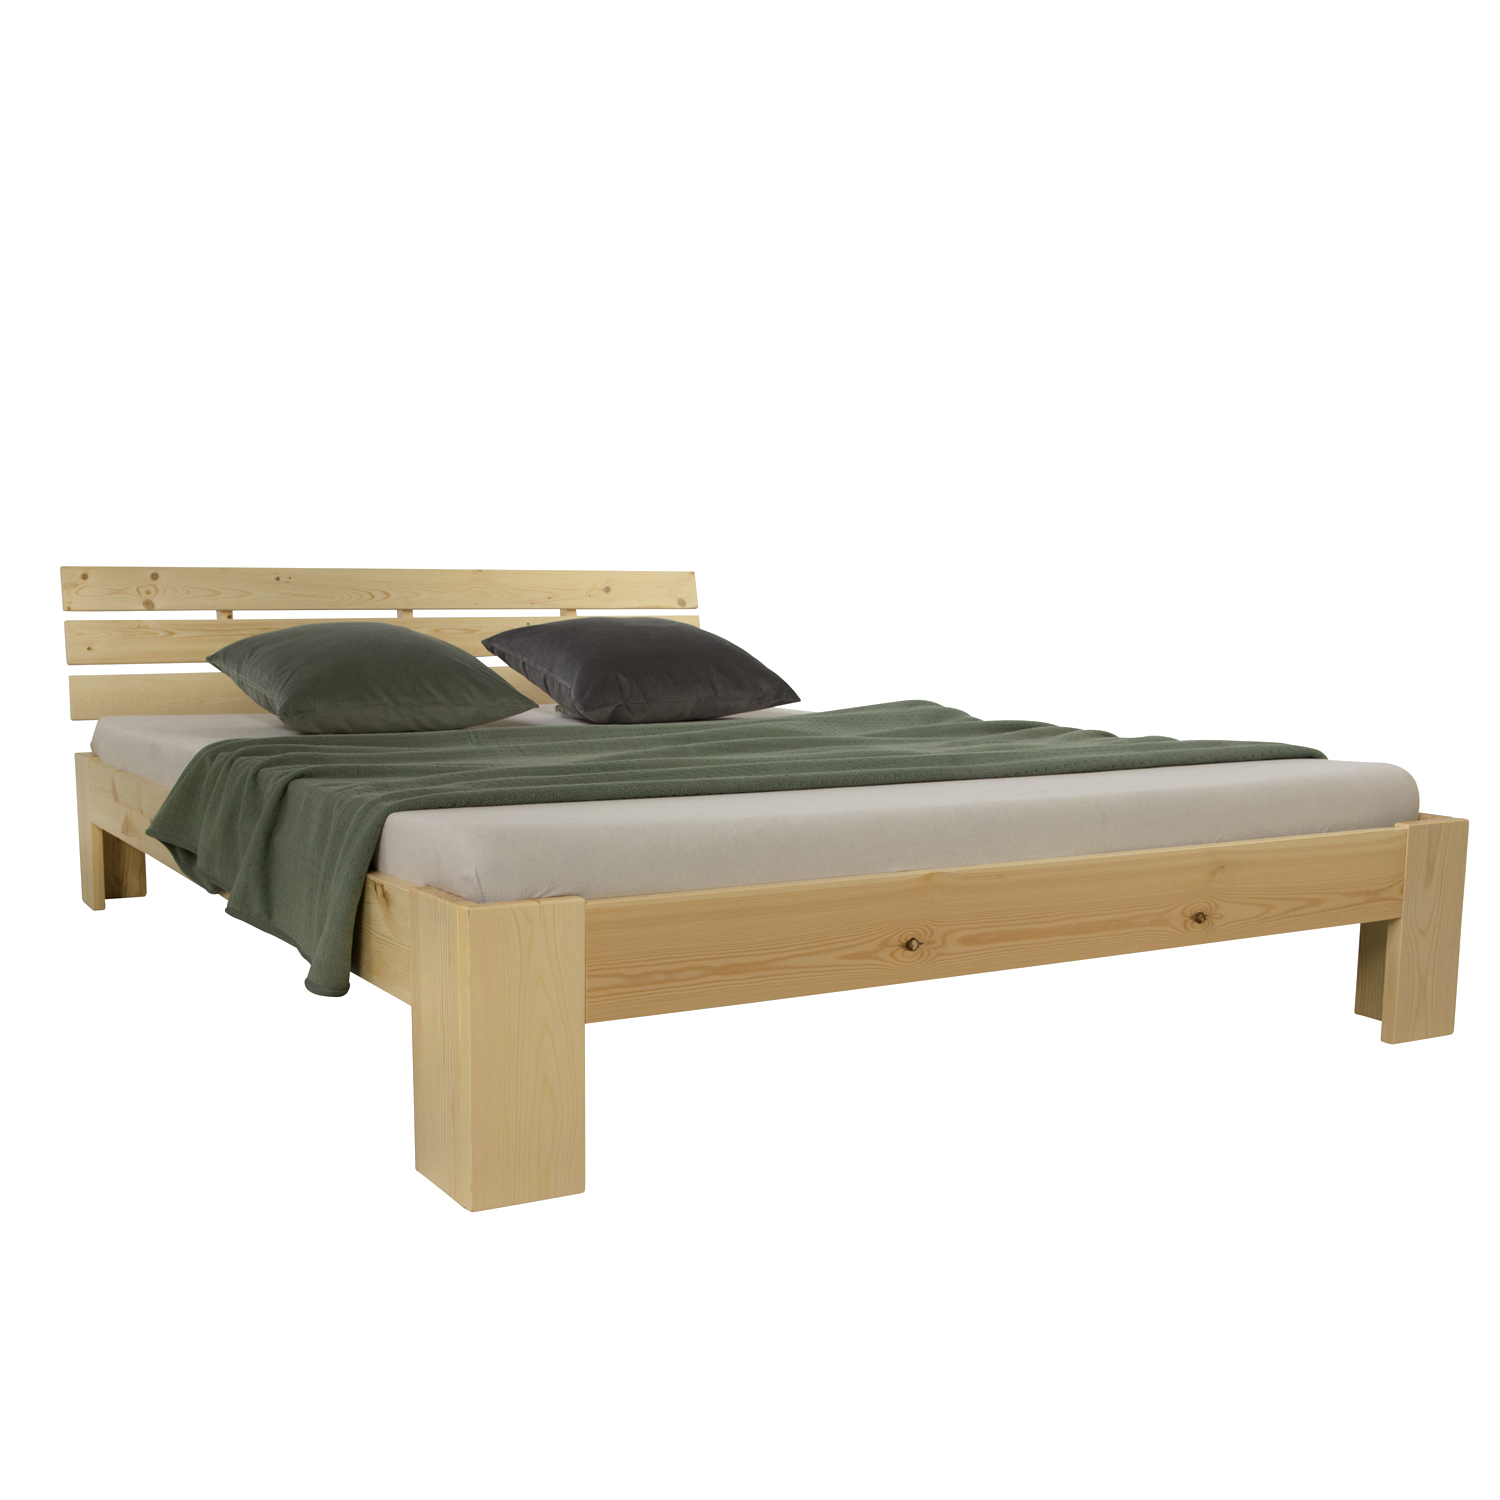 Double bed woodbed futonbett 140x200 light